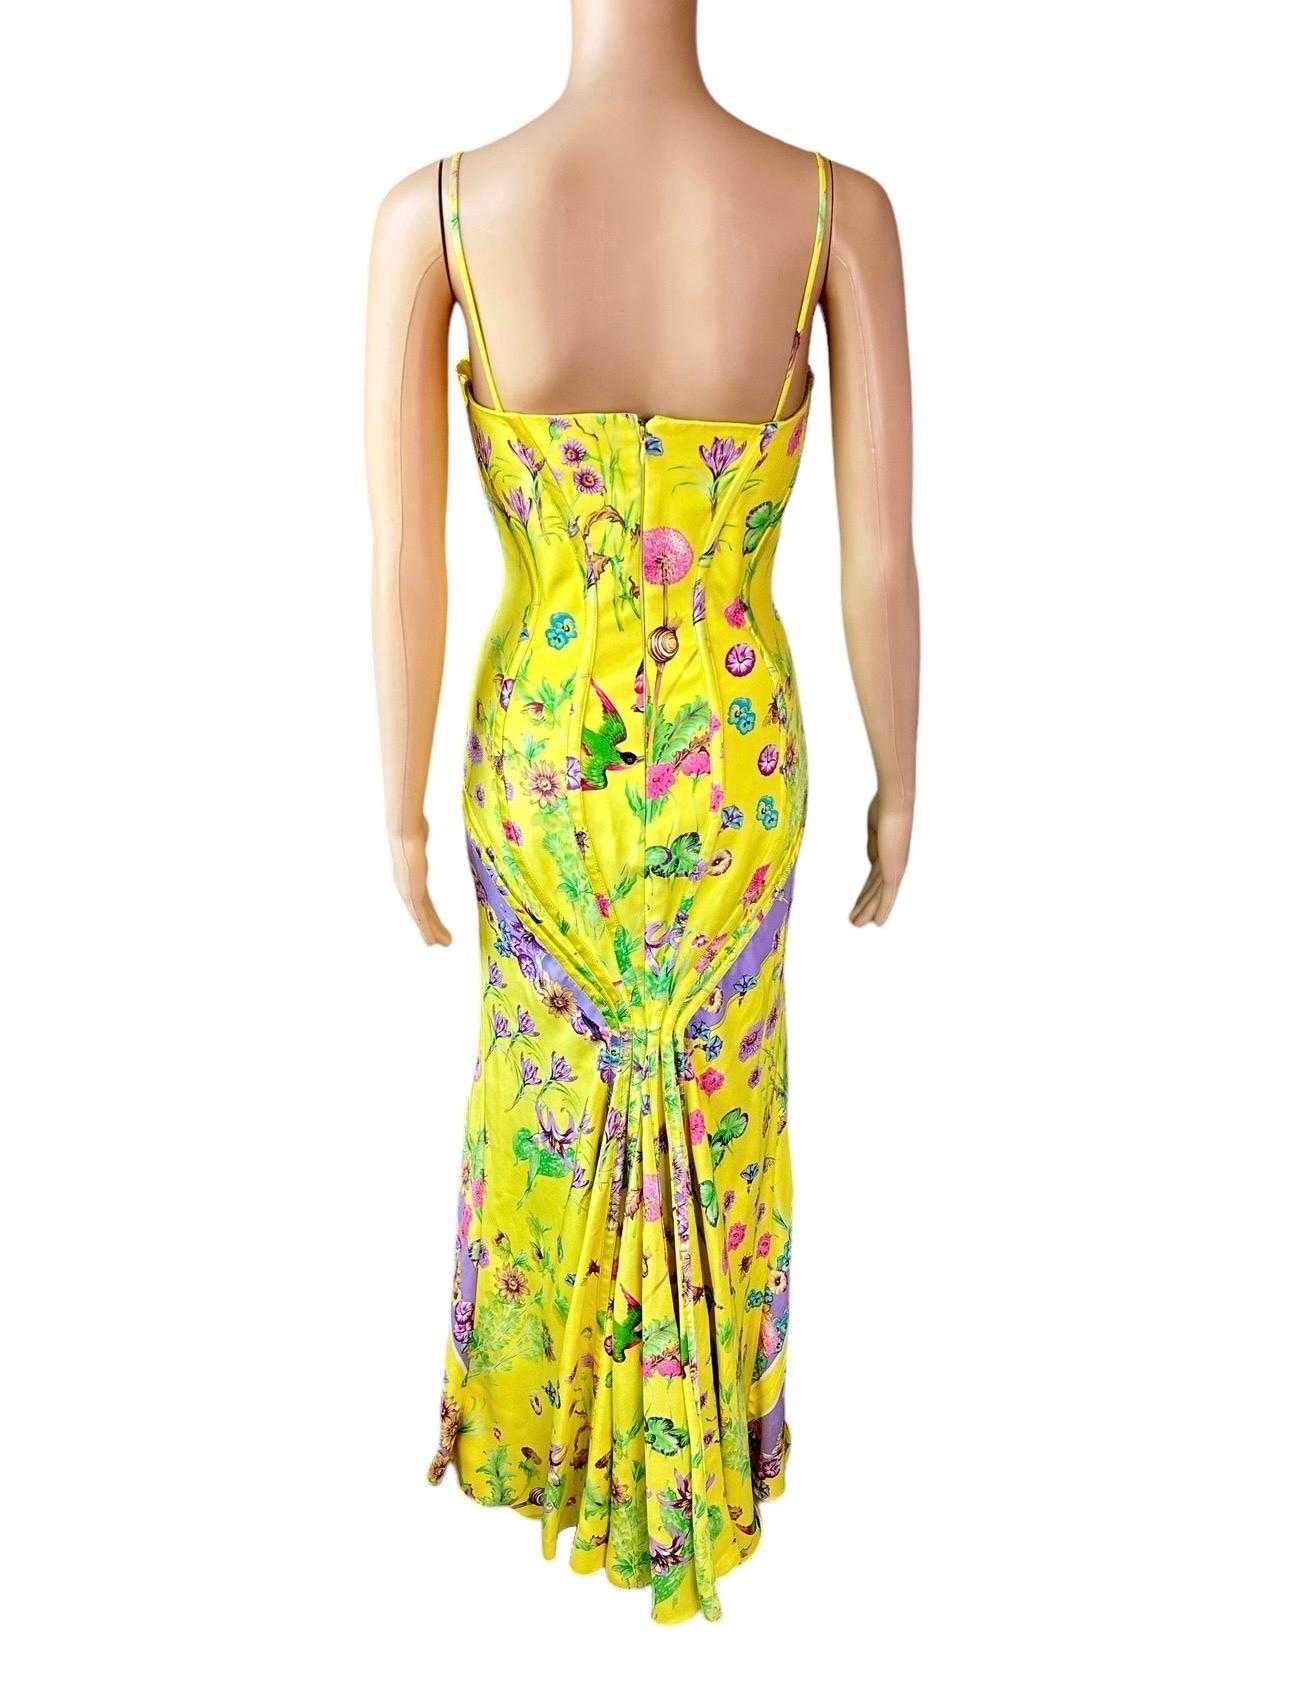 Women's or Men's Versace S/S 2006 Bustier Corset Floral Print Evening Dress Gown For Sale